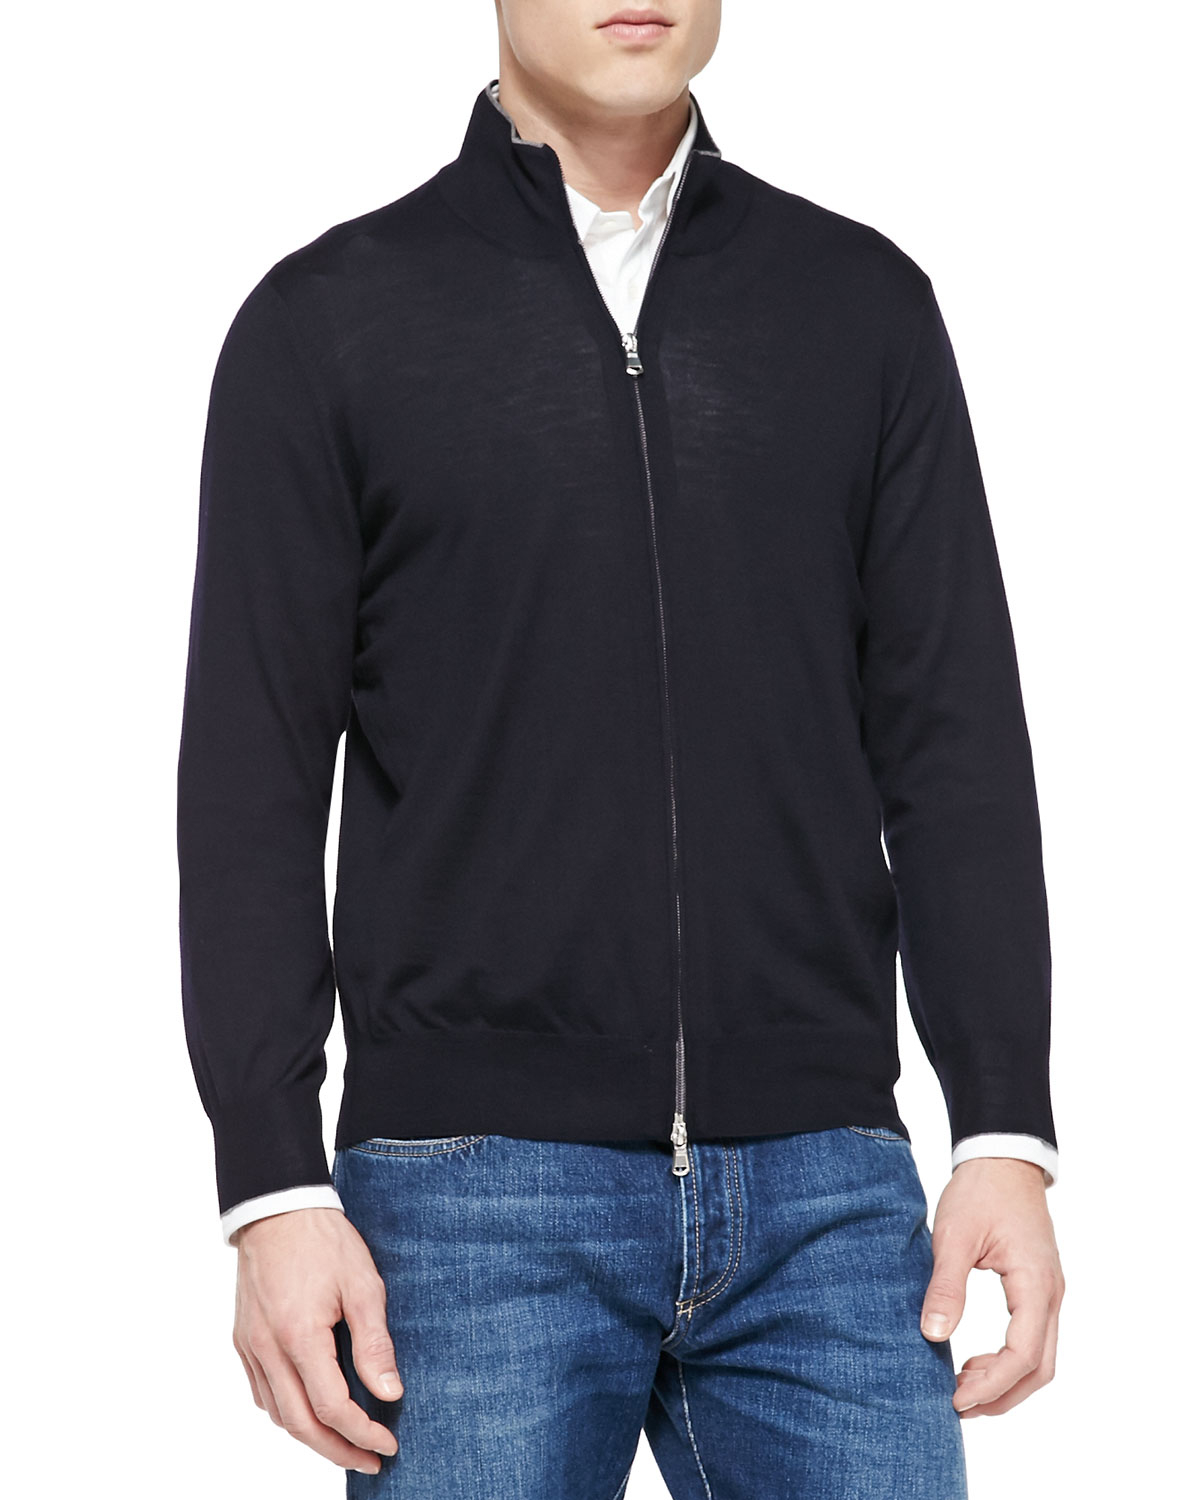 Brunello Cucinelli Fine-gauge Full-zip Sweater in Blue for Men - Lyst